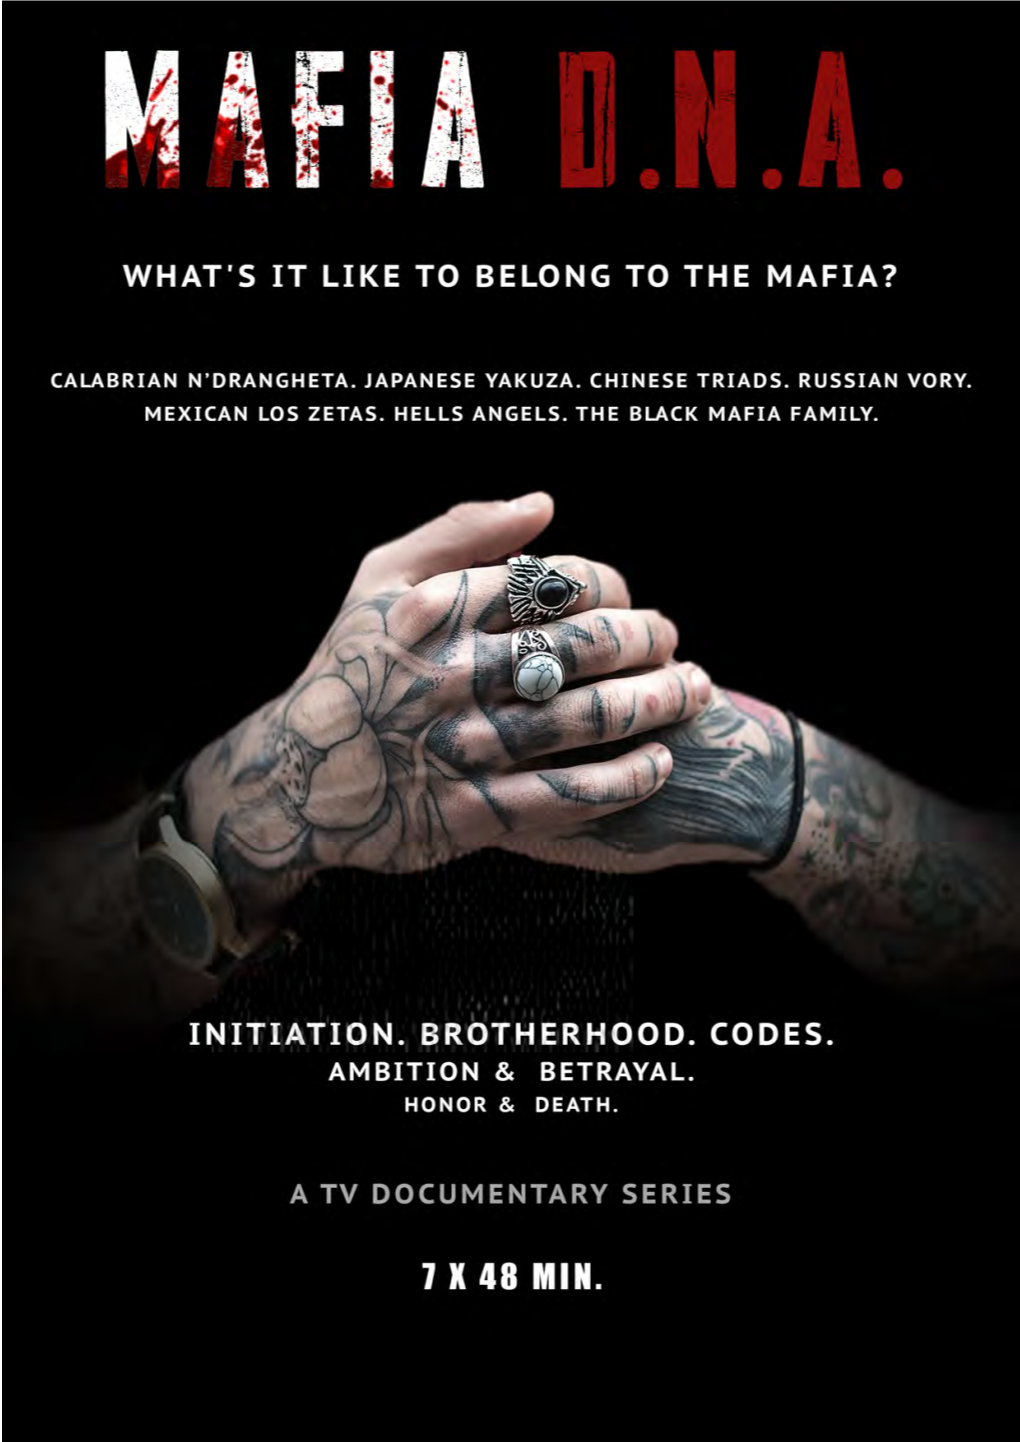 Mafias DNA Brochure 2019.Pdf